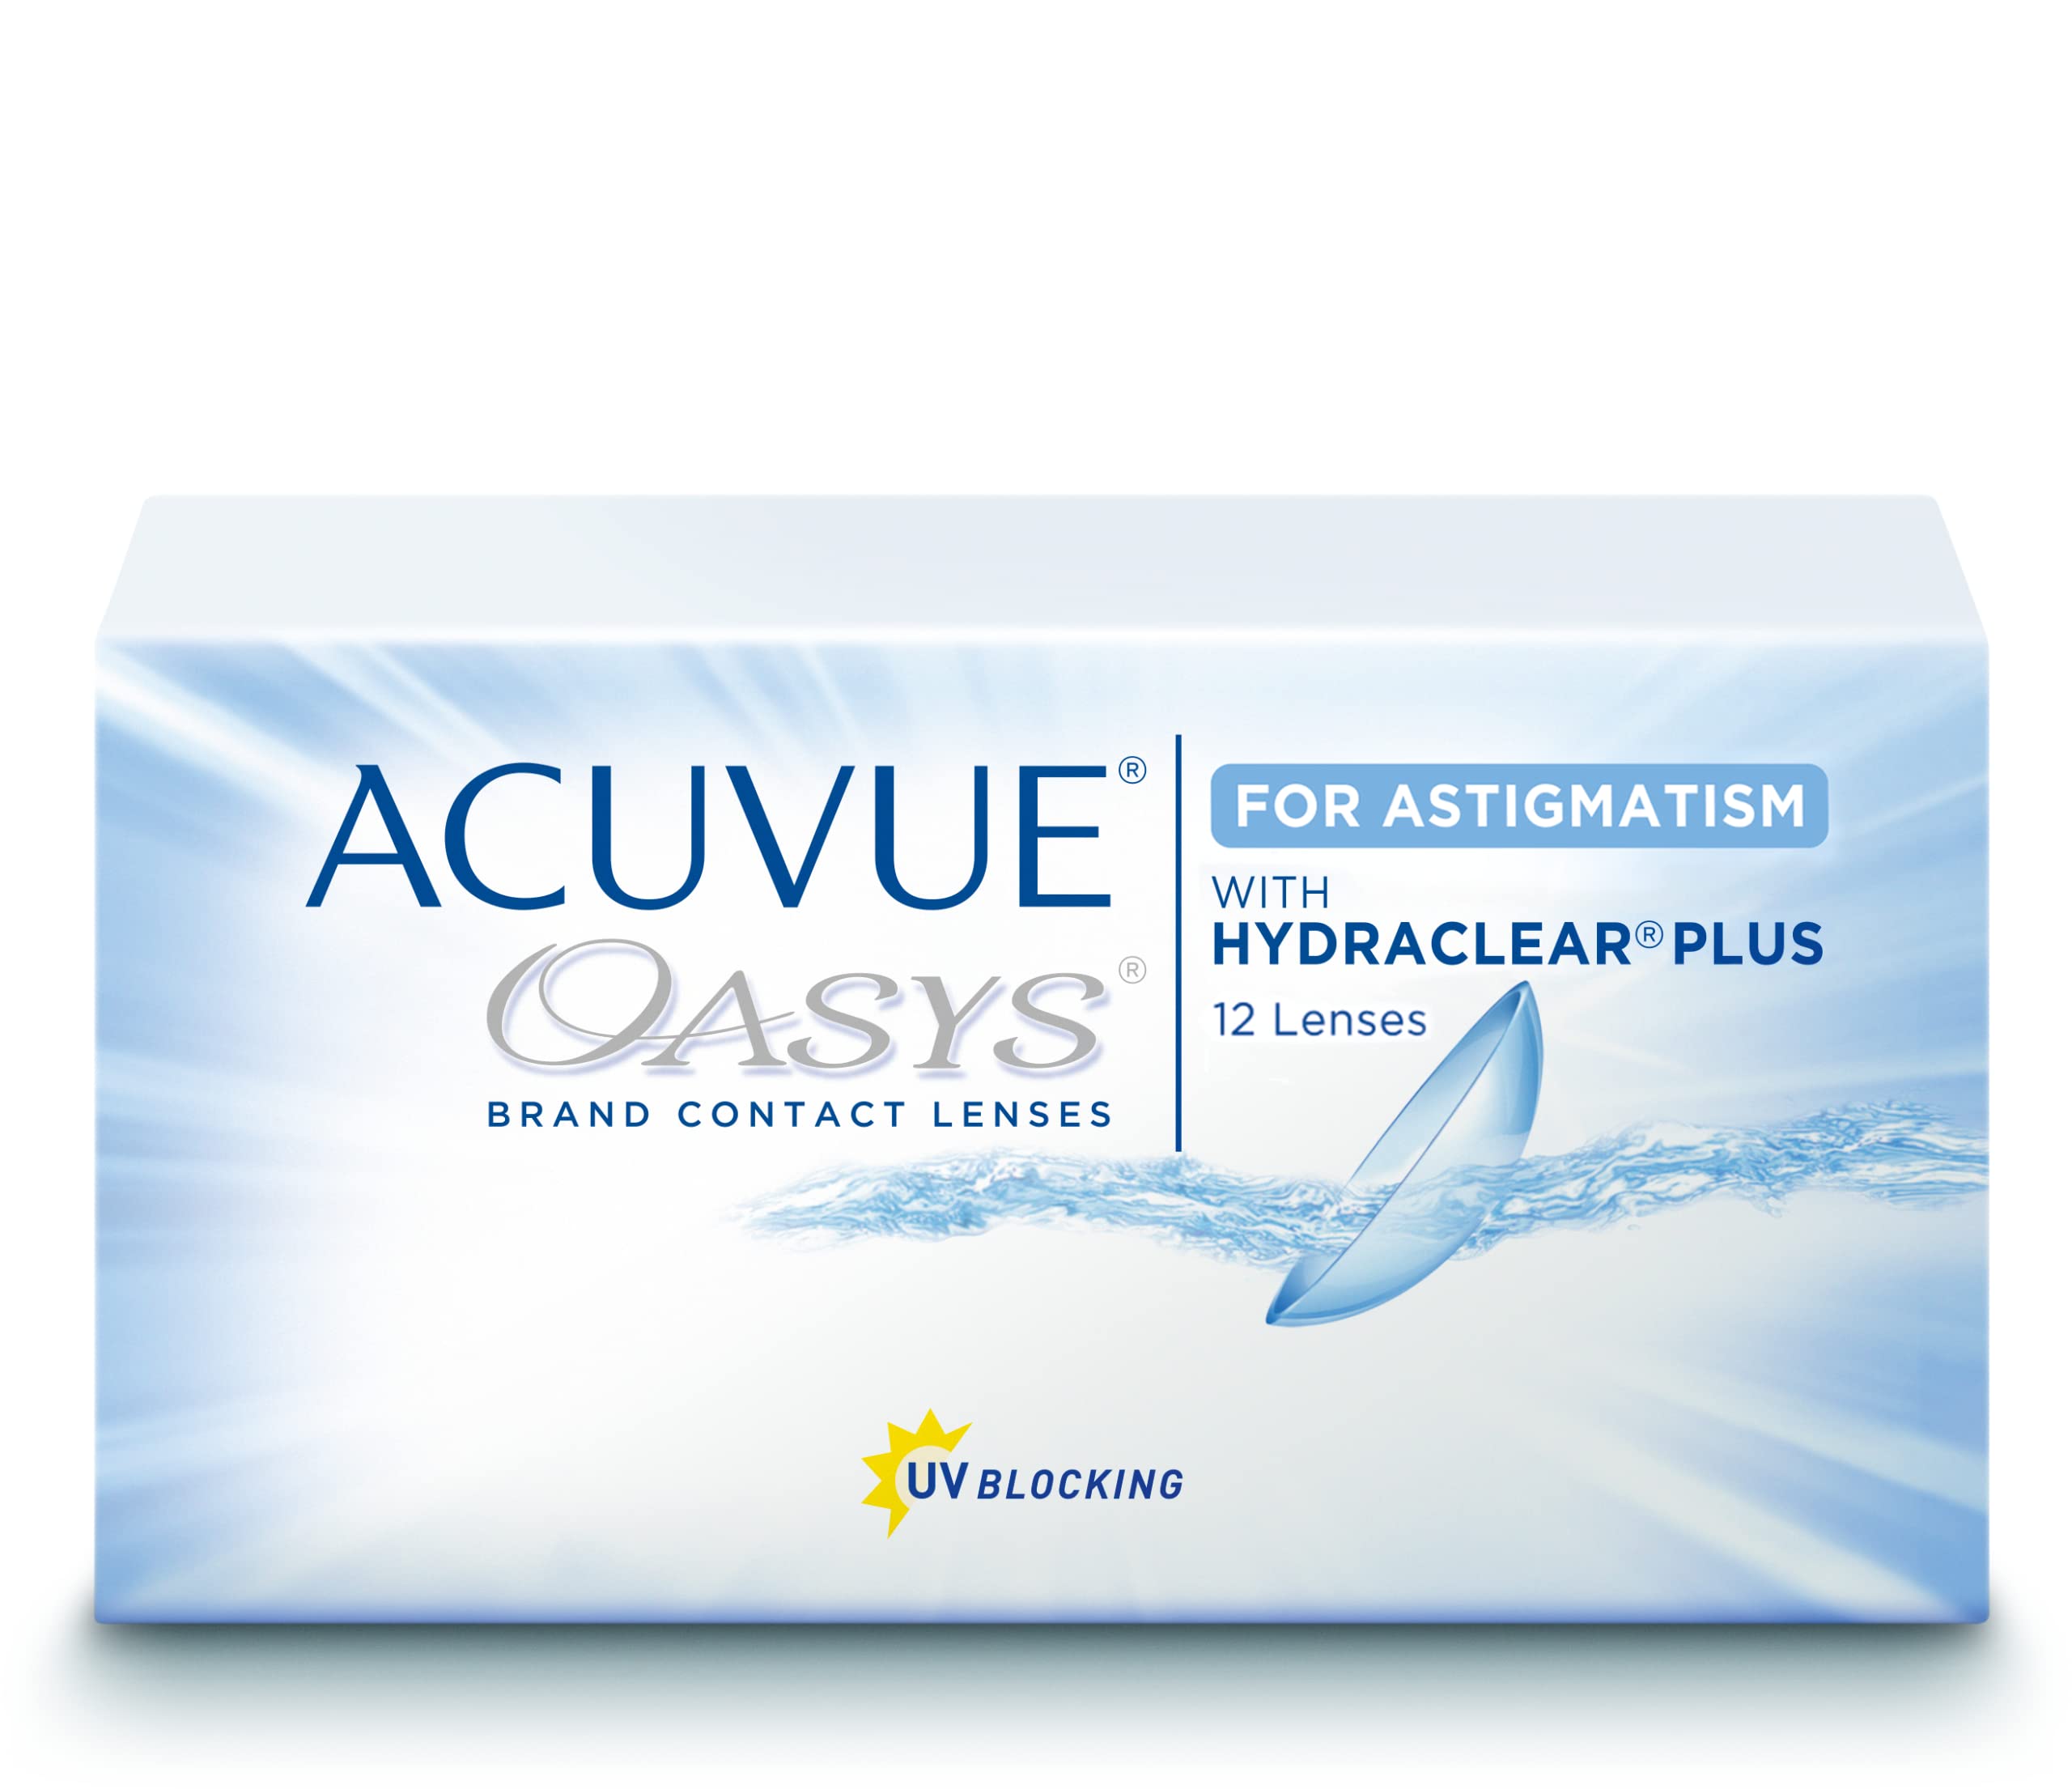 Acuvue Oasys for Astigmatism 2-Wochenlinsen weich, 12 Stück/BC 8.6 mm/DIA 14.5 / CYL -2.75 / Achse 150/3.25 Dioptrien